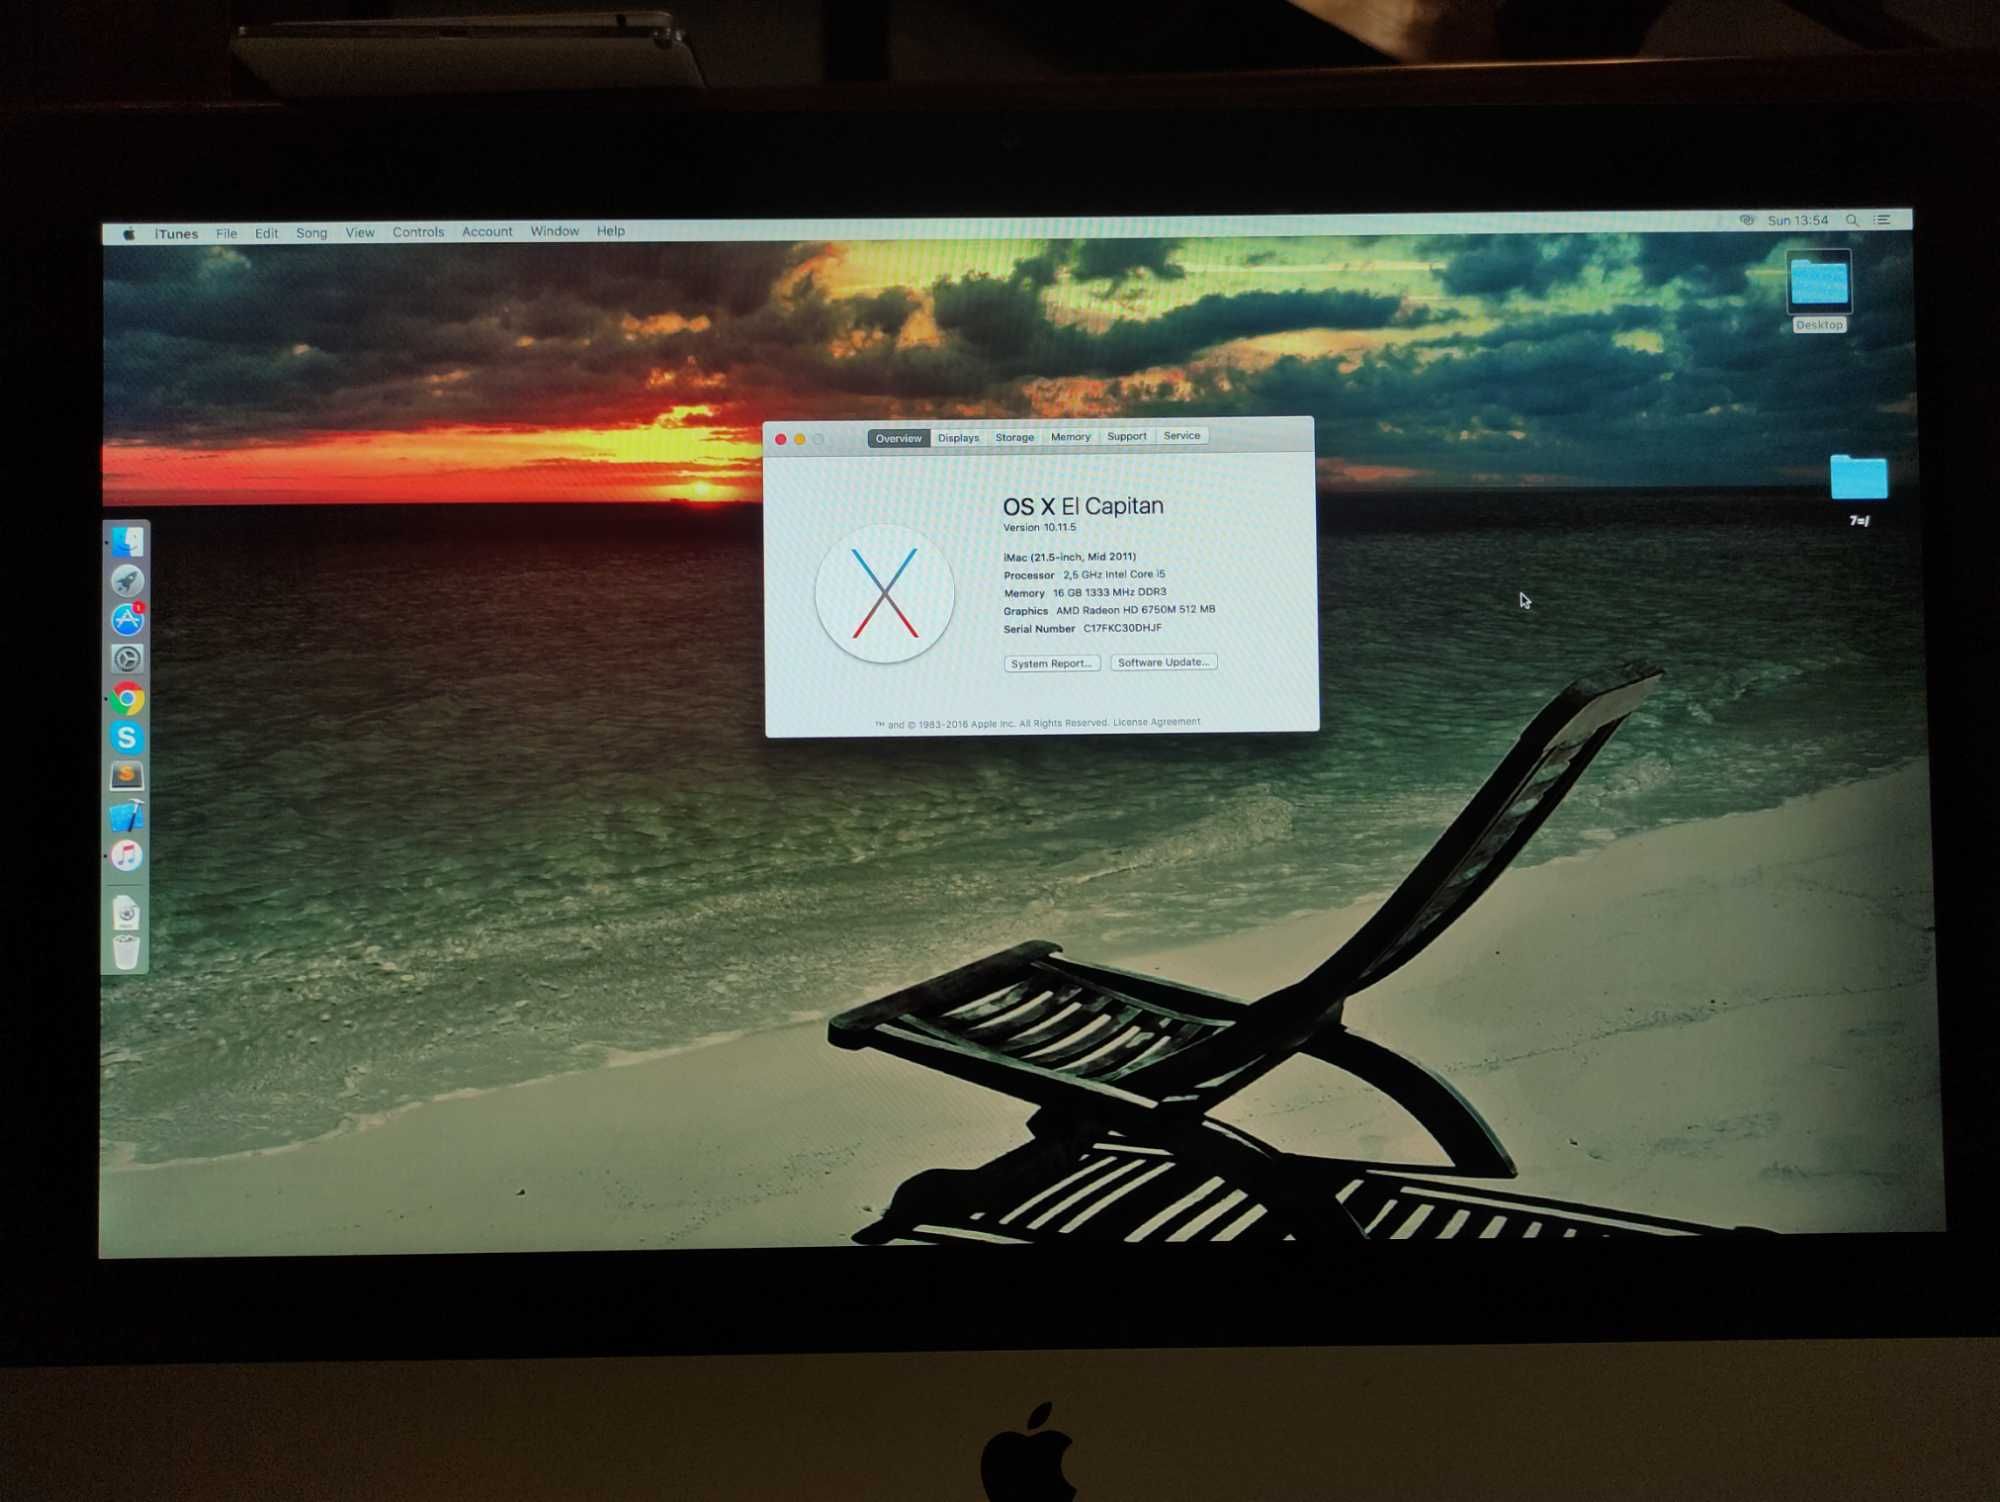 iMac (21.5 - inch, Mid 2011)